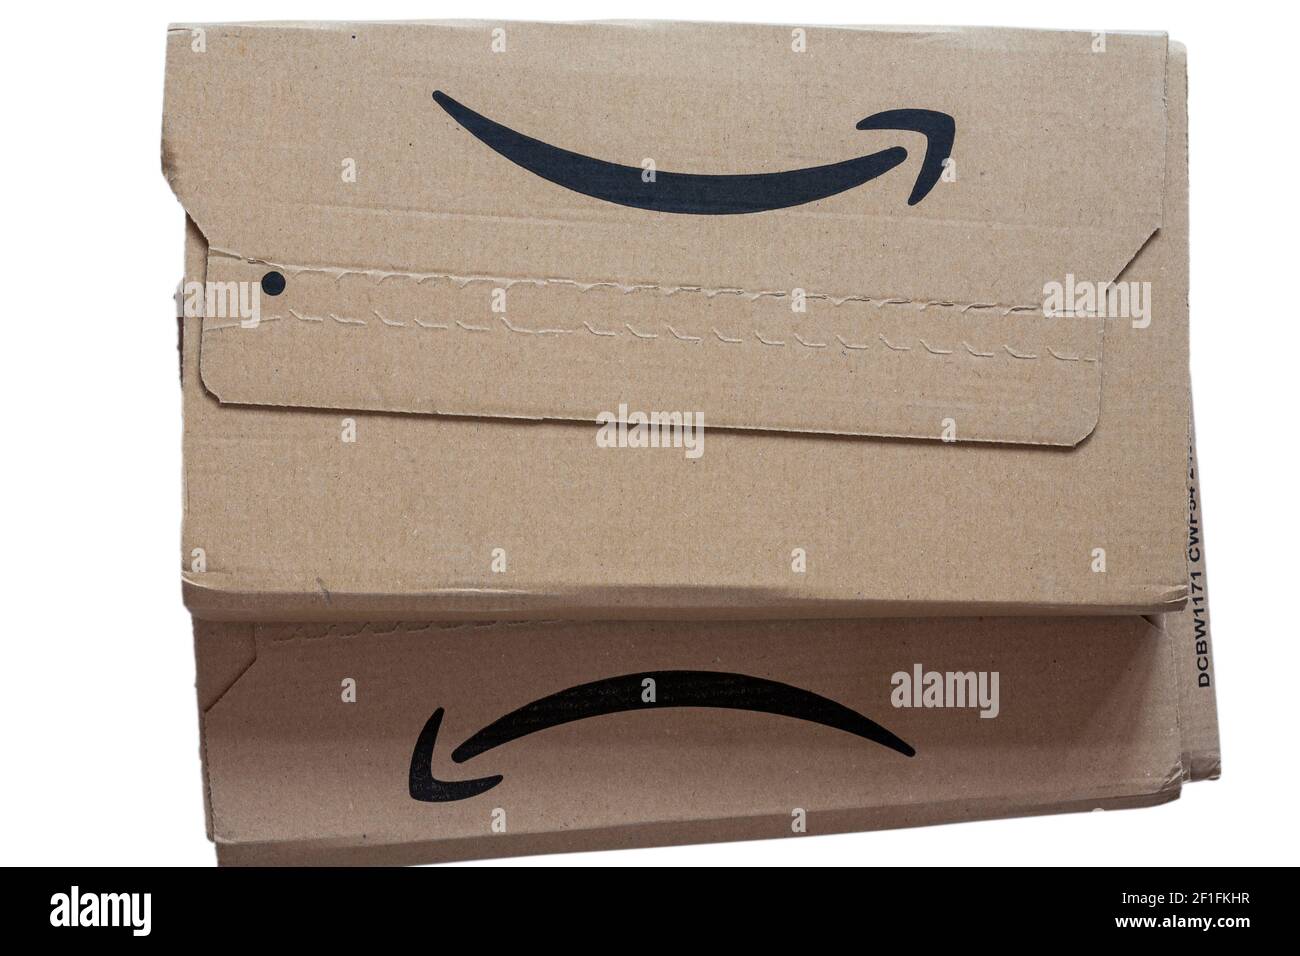 Amazon packages with logo on - Amazon company logo smile Stock Photo